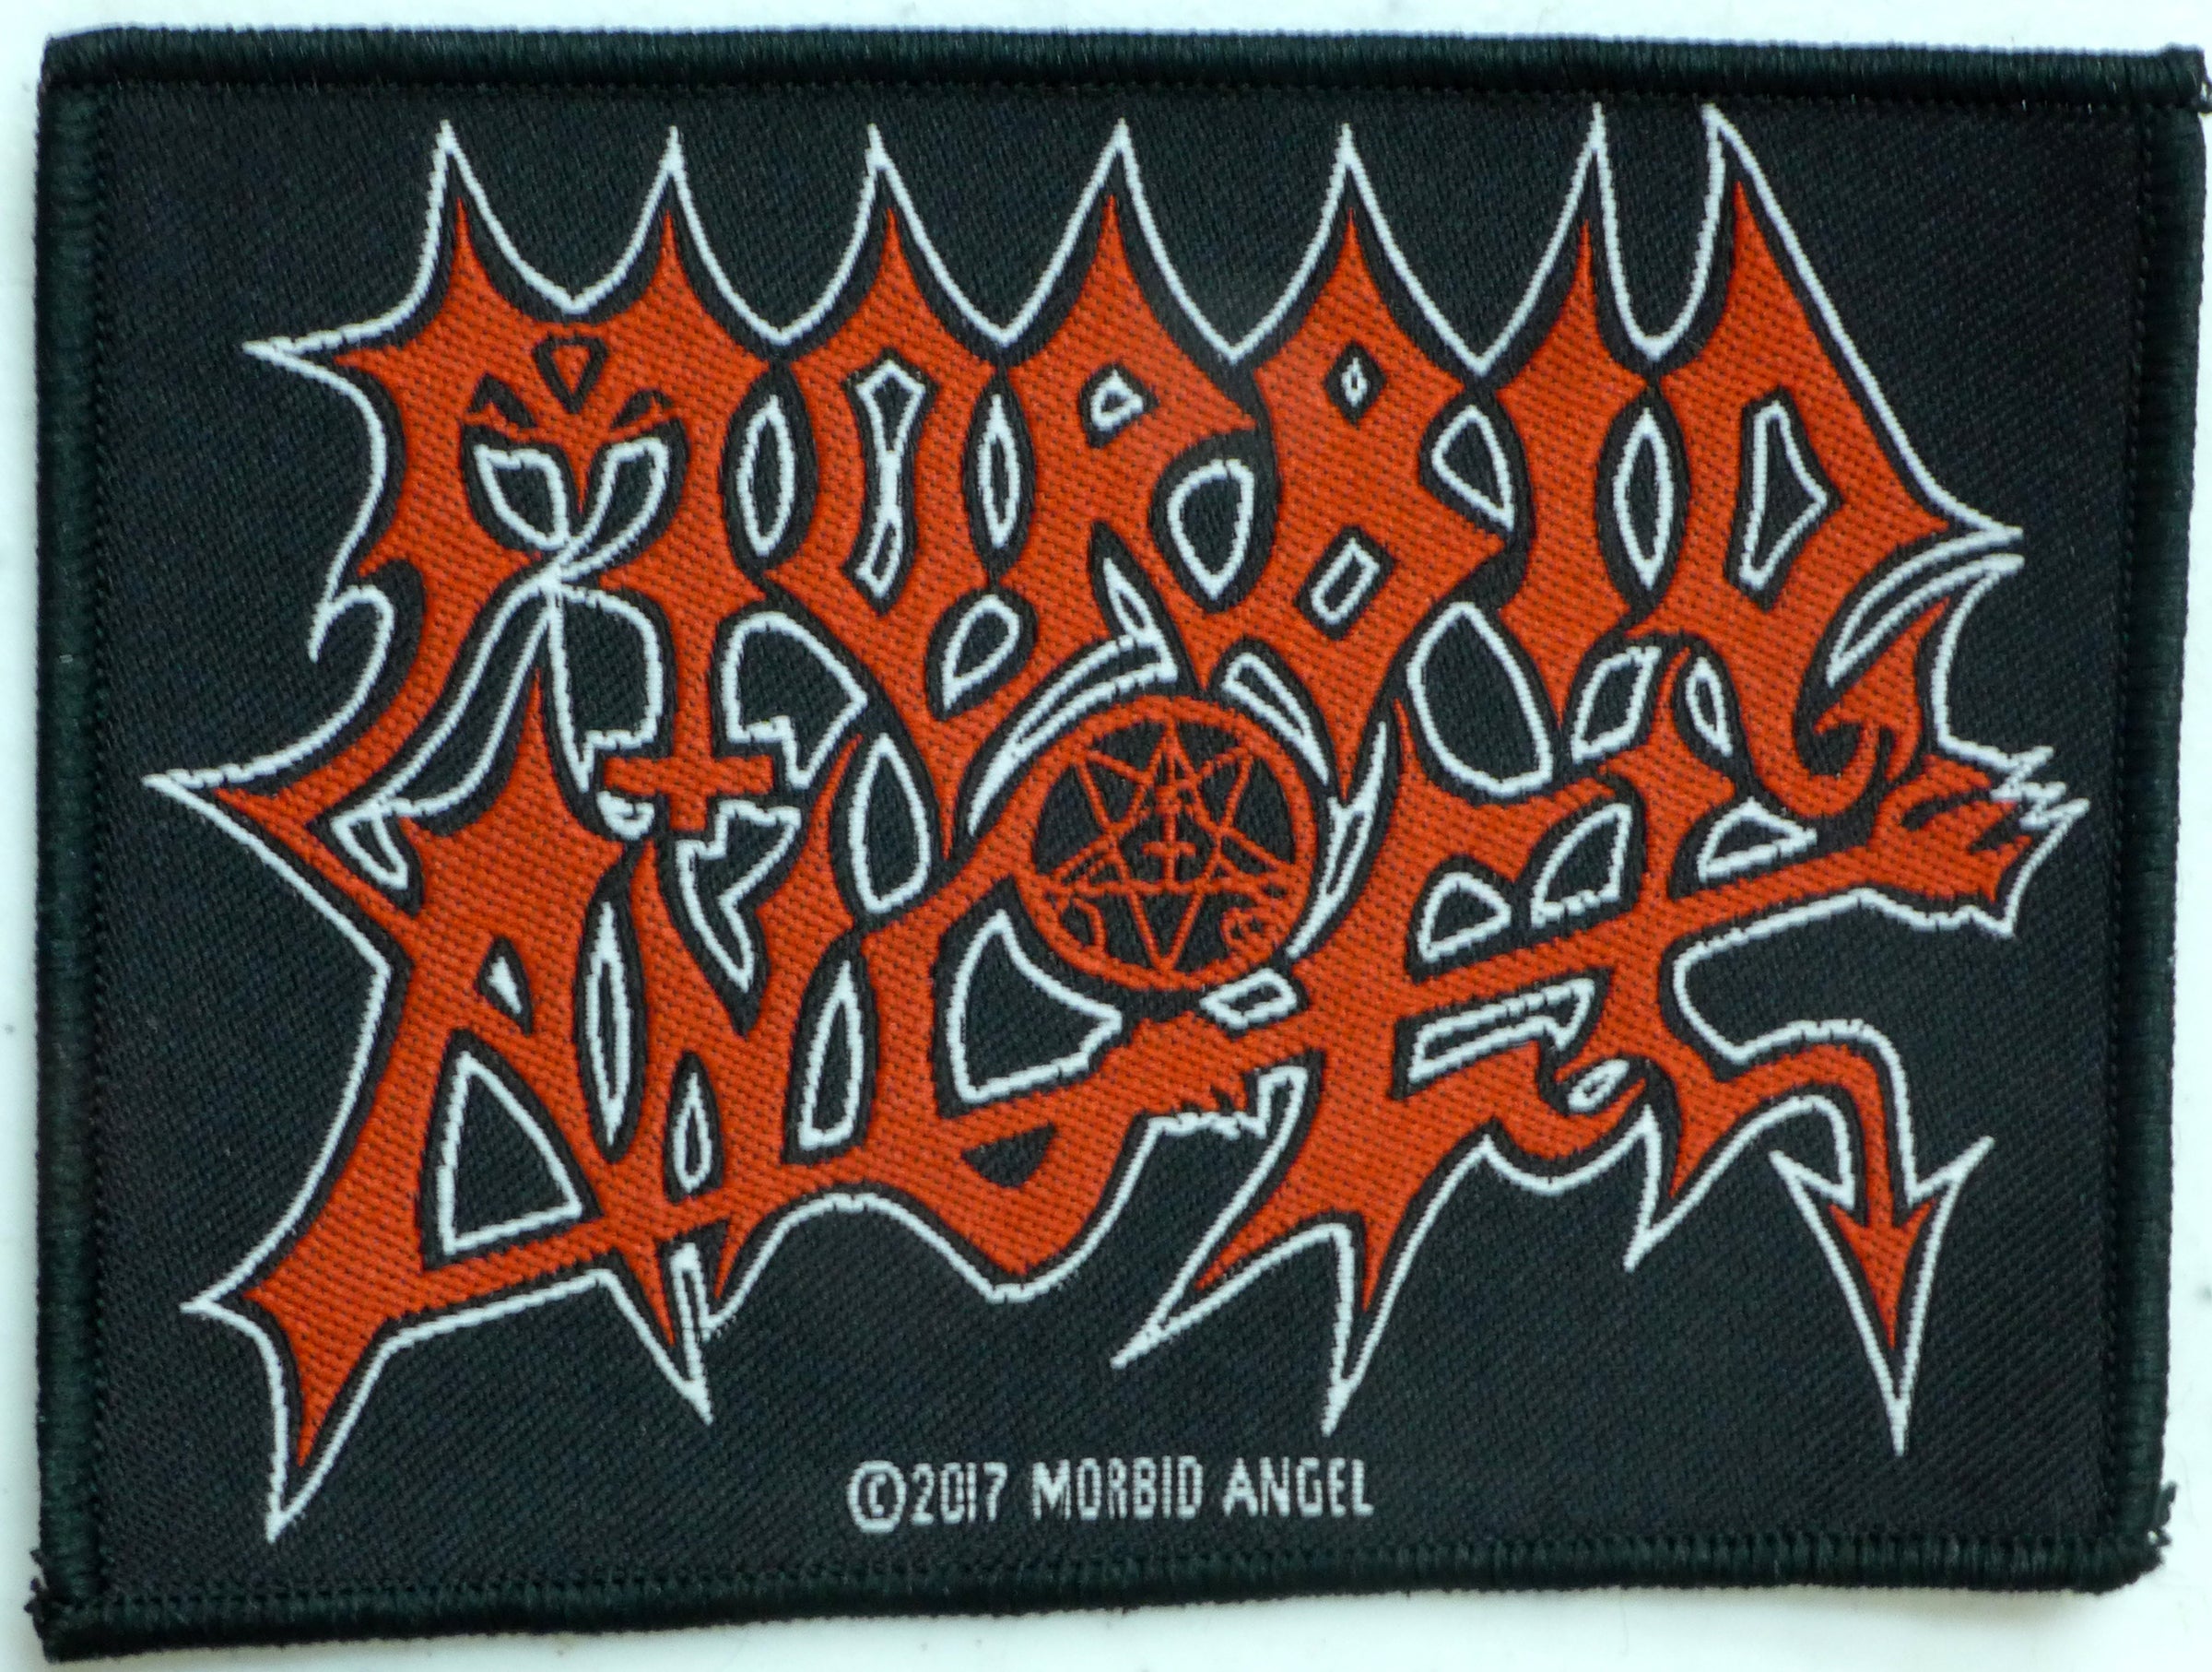 morbid angel logo